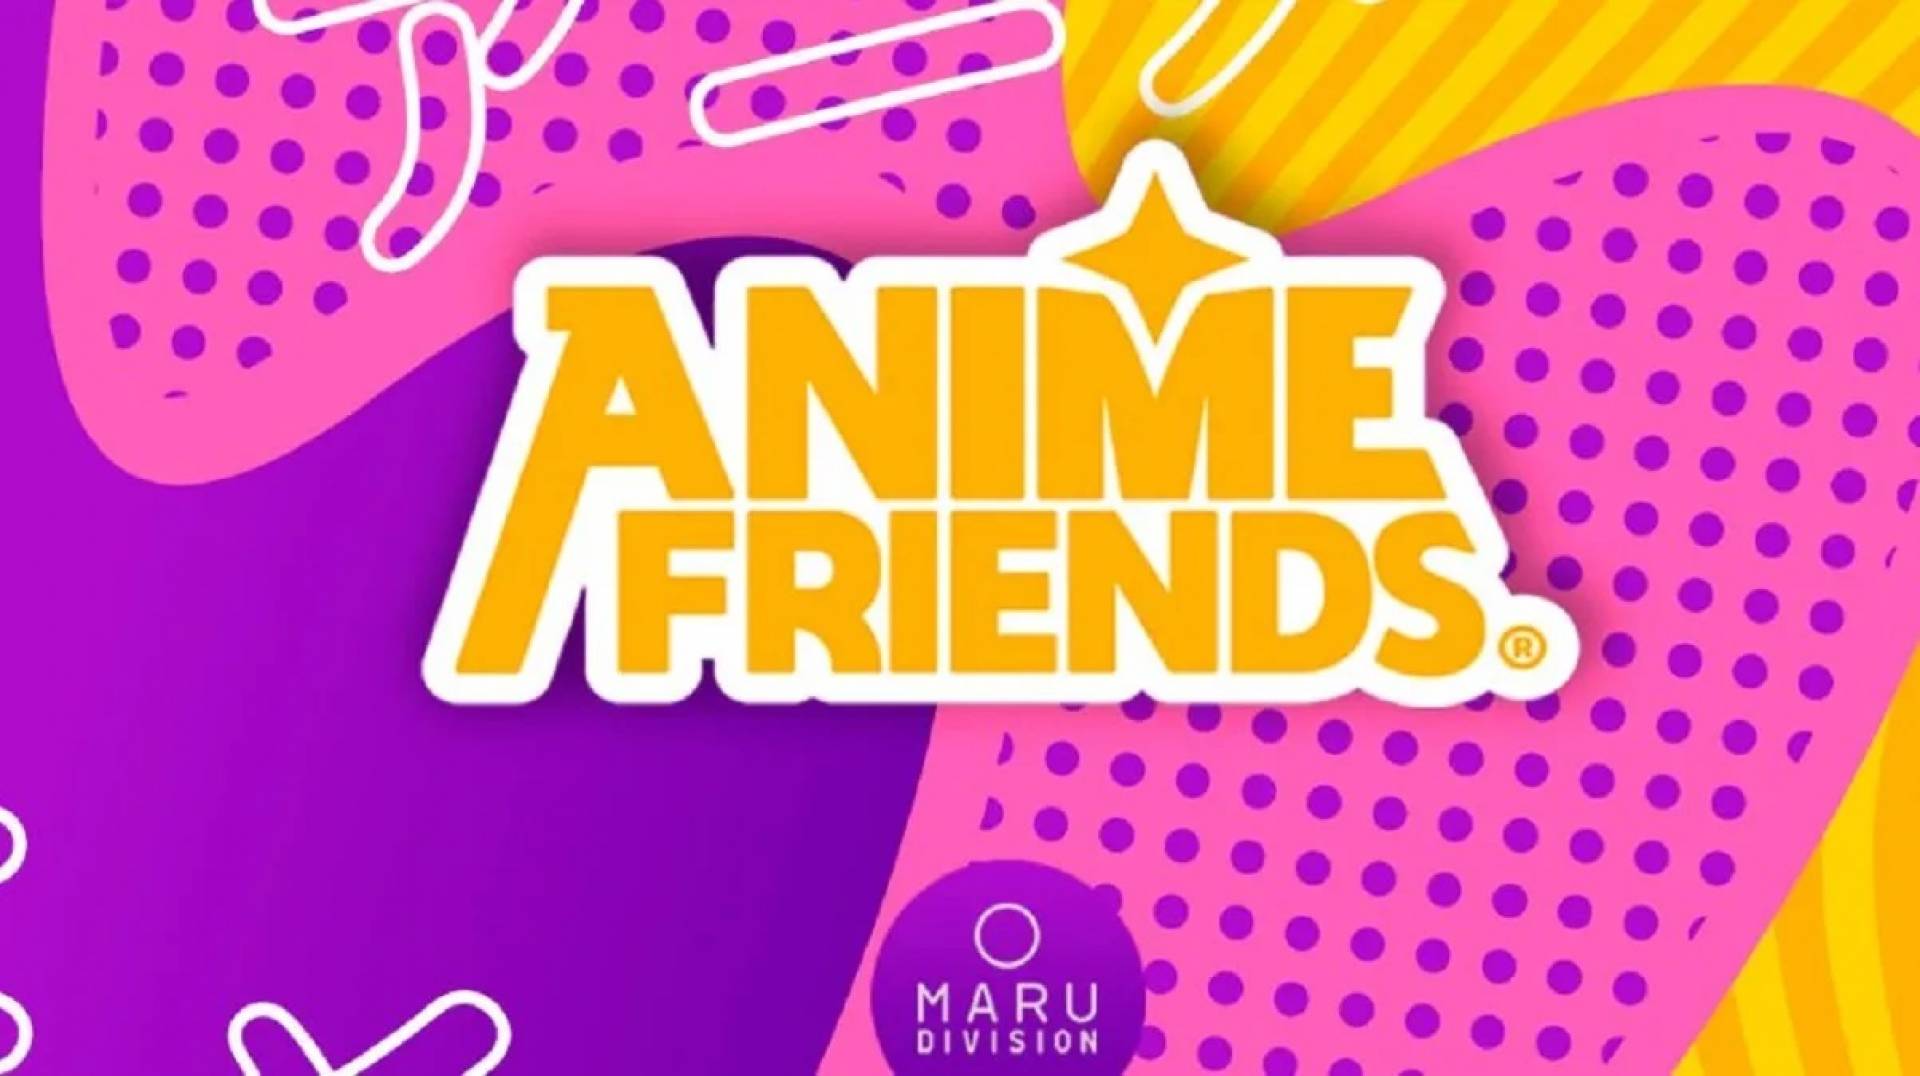 Anime Friends - O Tokyo Anime Award Festival anunciou na semana